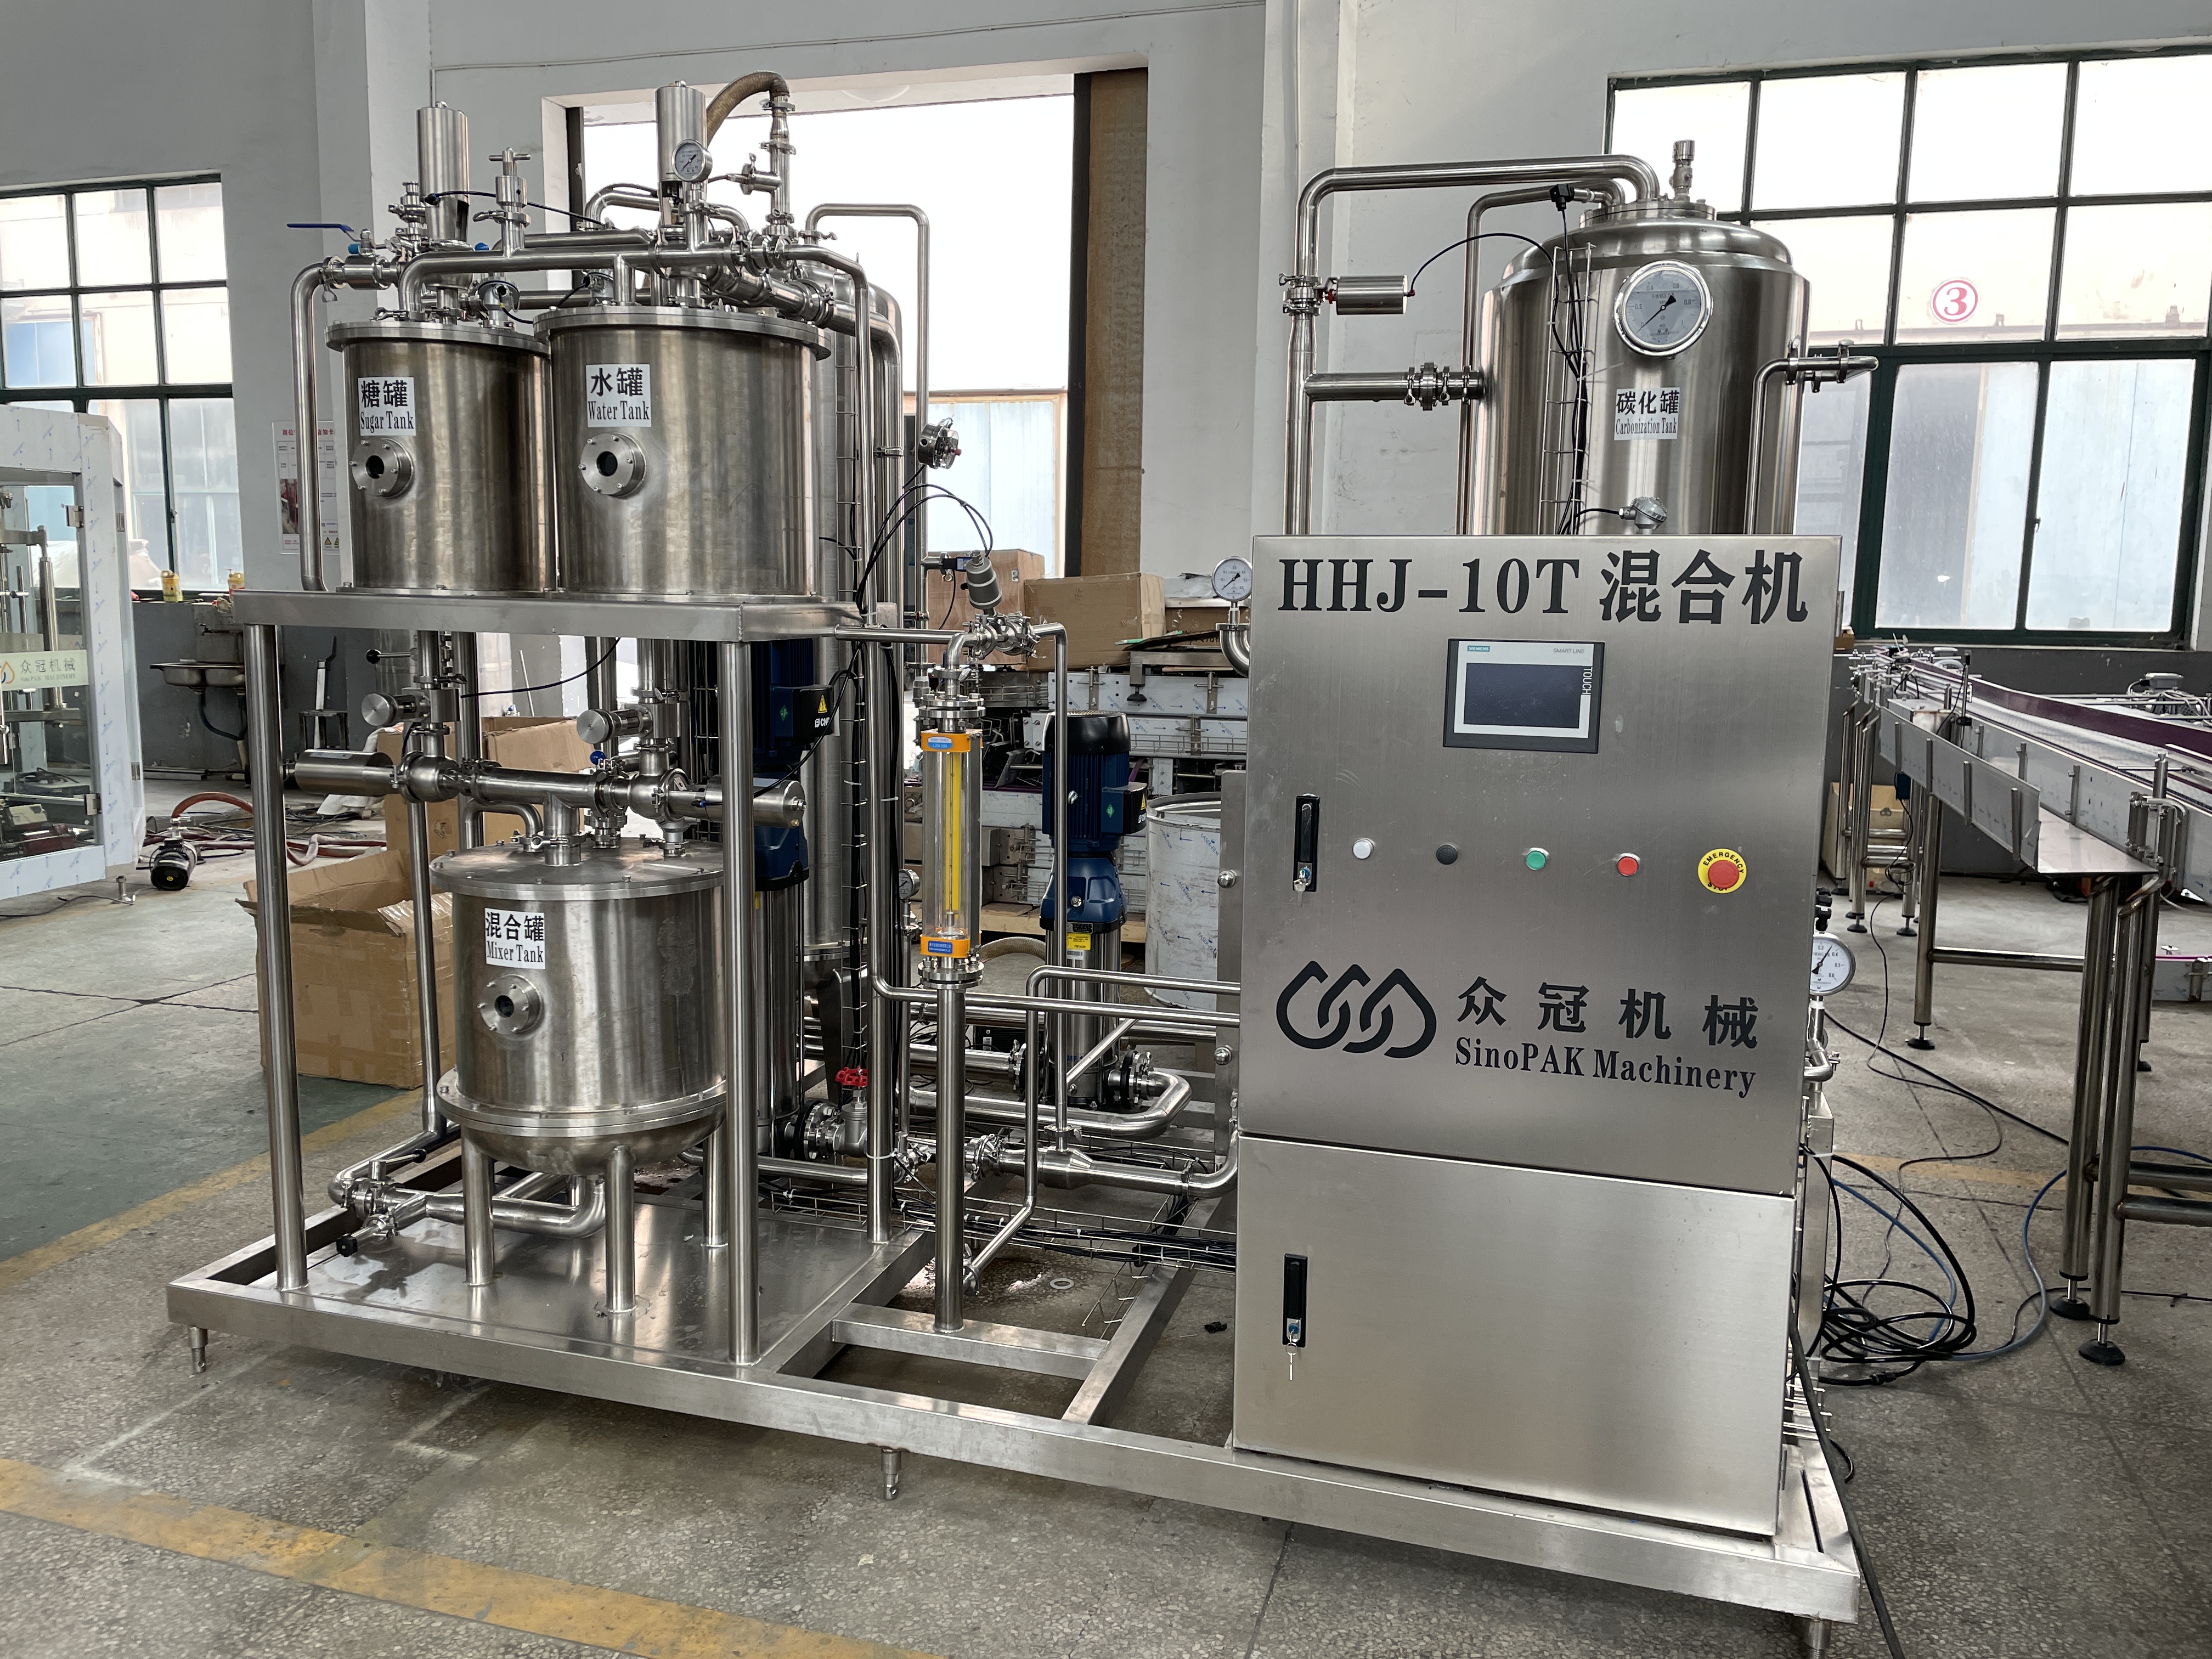 Carbonated soft drink preparing system